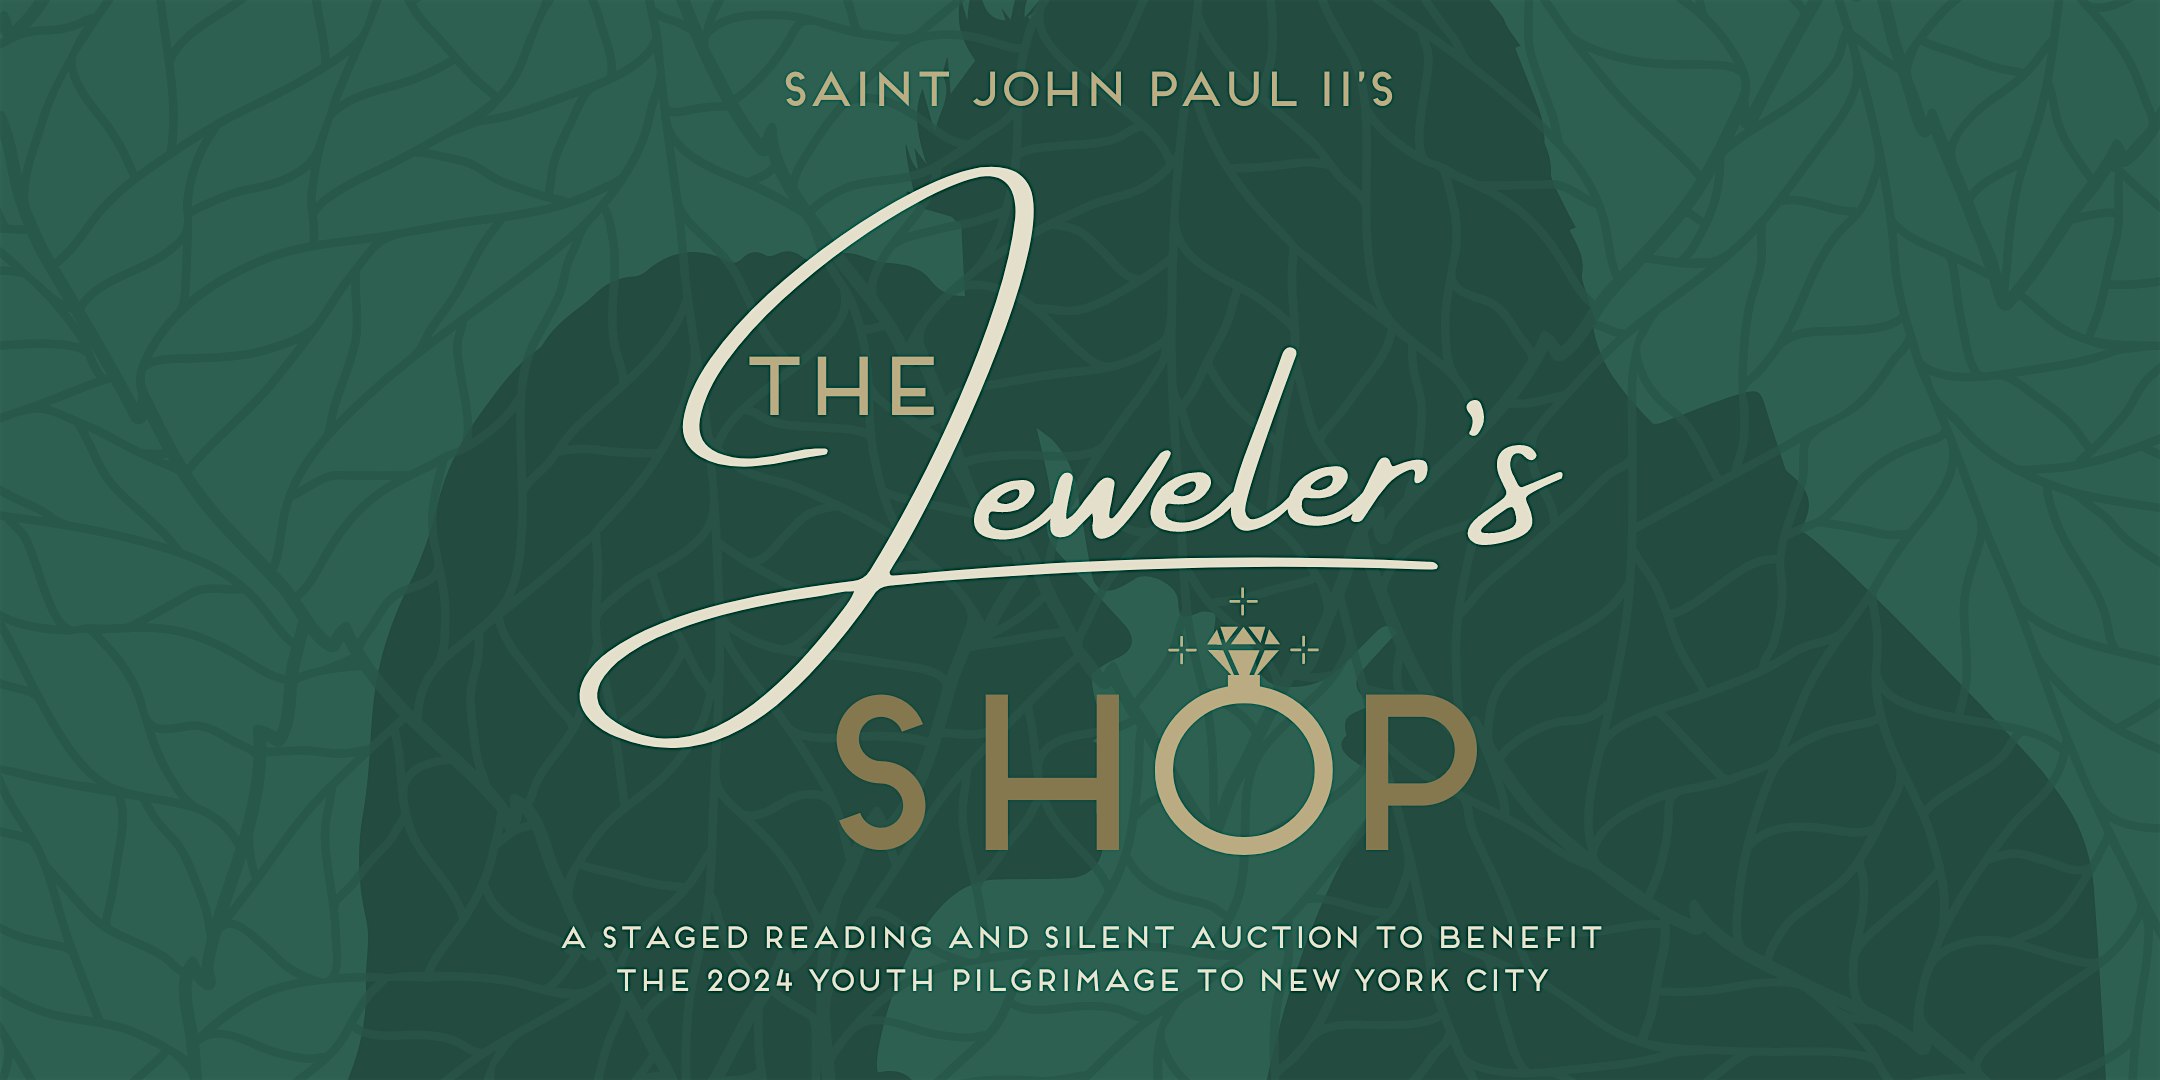 St. John Paul II's The Jeweler's Shop